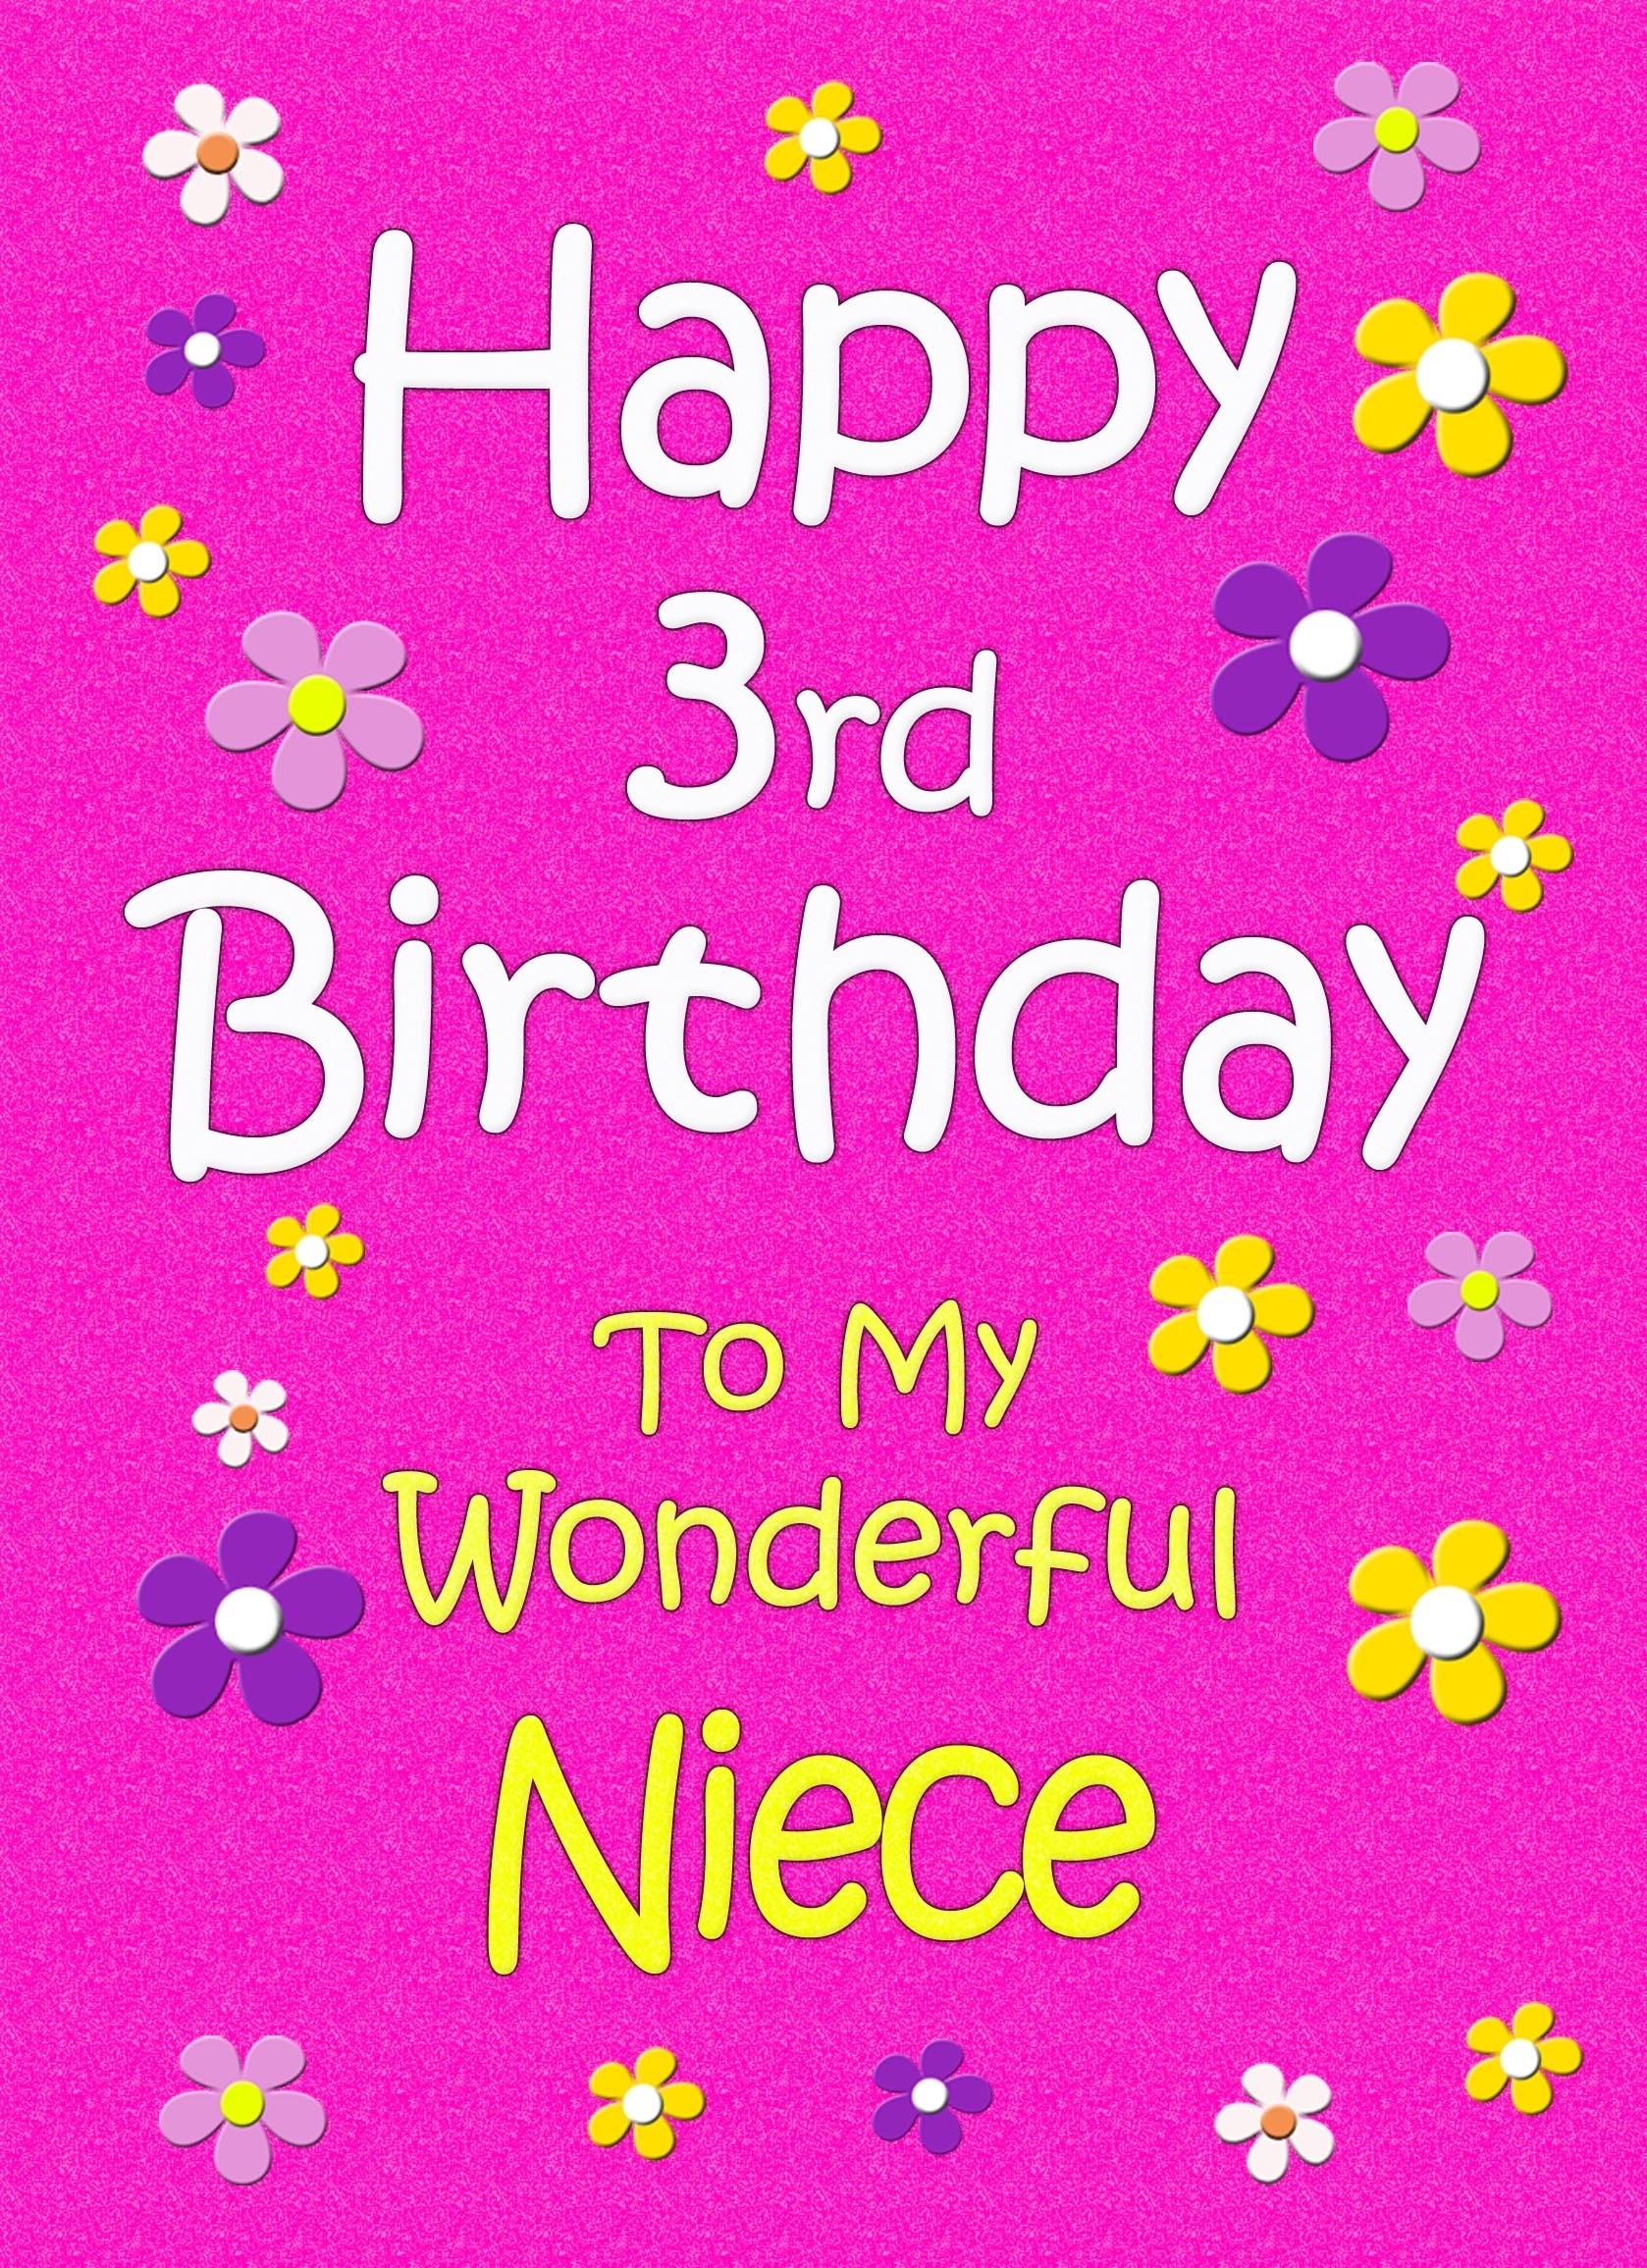 Niece 3rd Birthday Card (Pink)